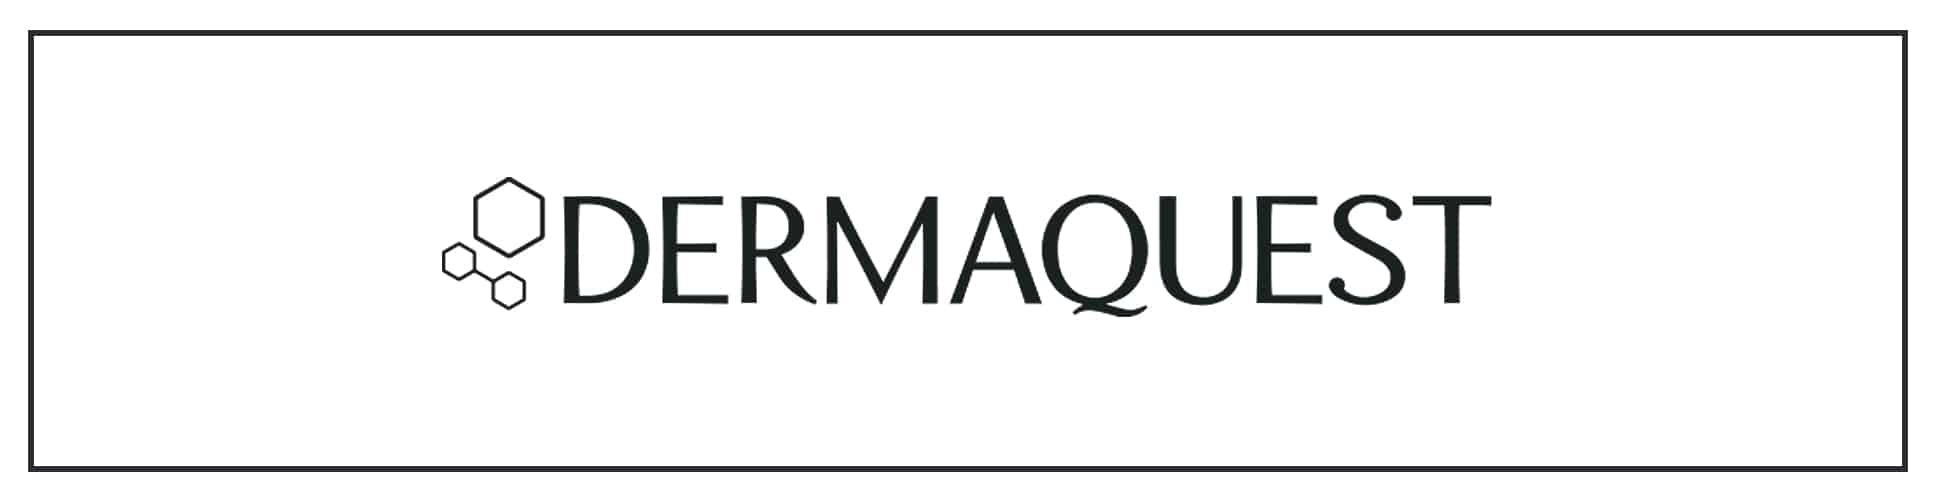 Dermaquest logo on a white background.